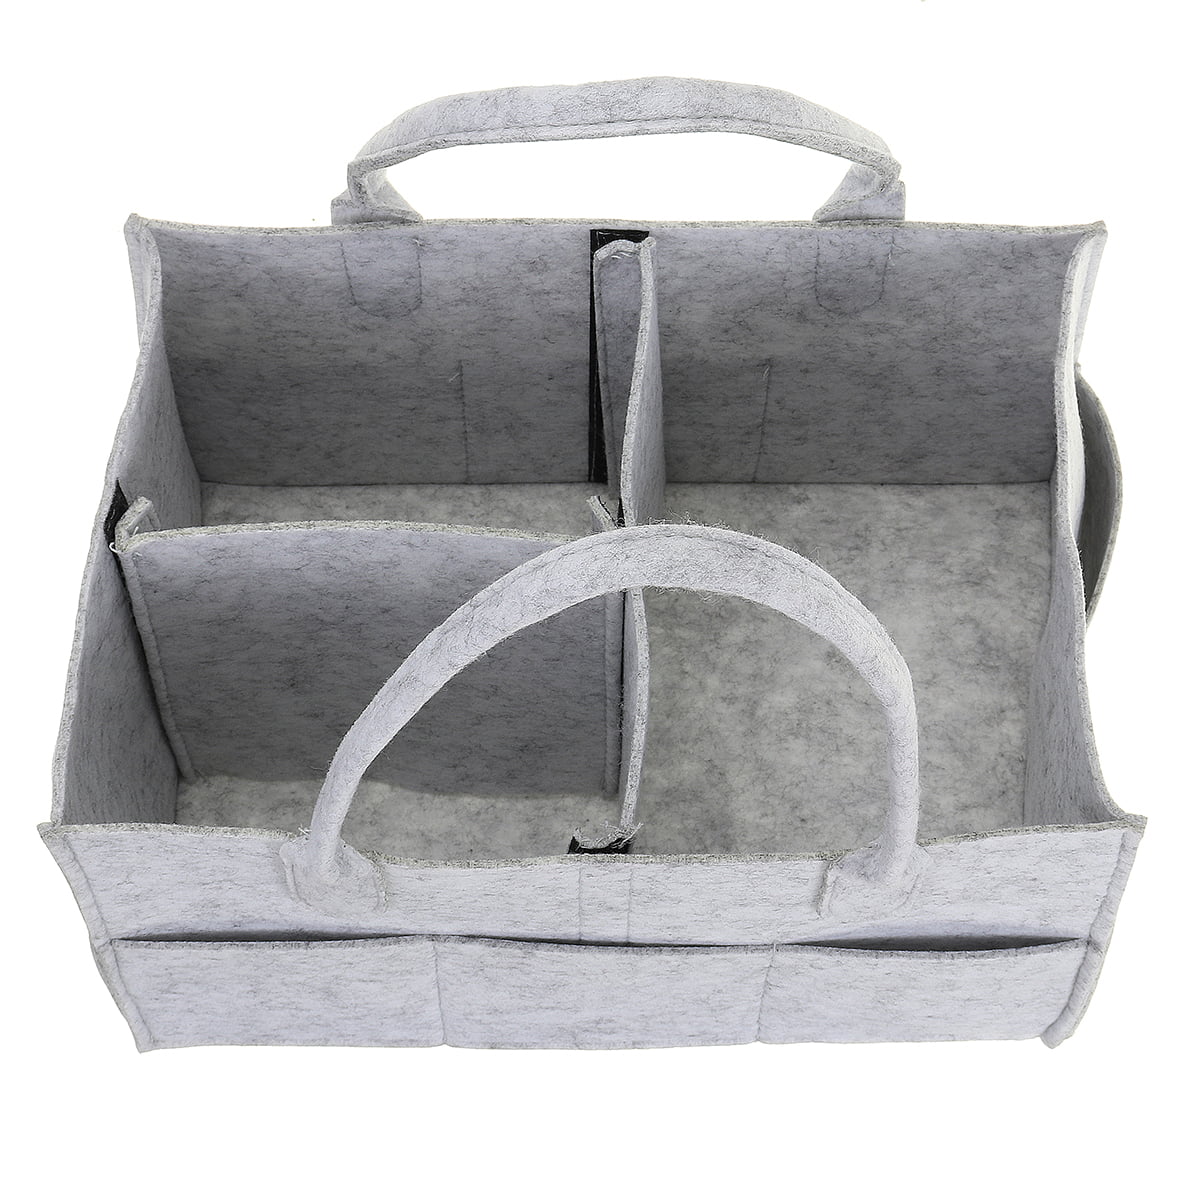 Baby Diaper Organizer Caddy Felt Changing Nappy Kids Storage Carrier Bag Grey UK 